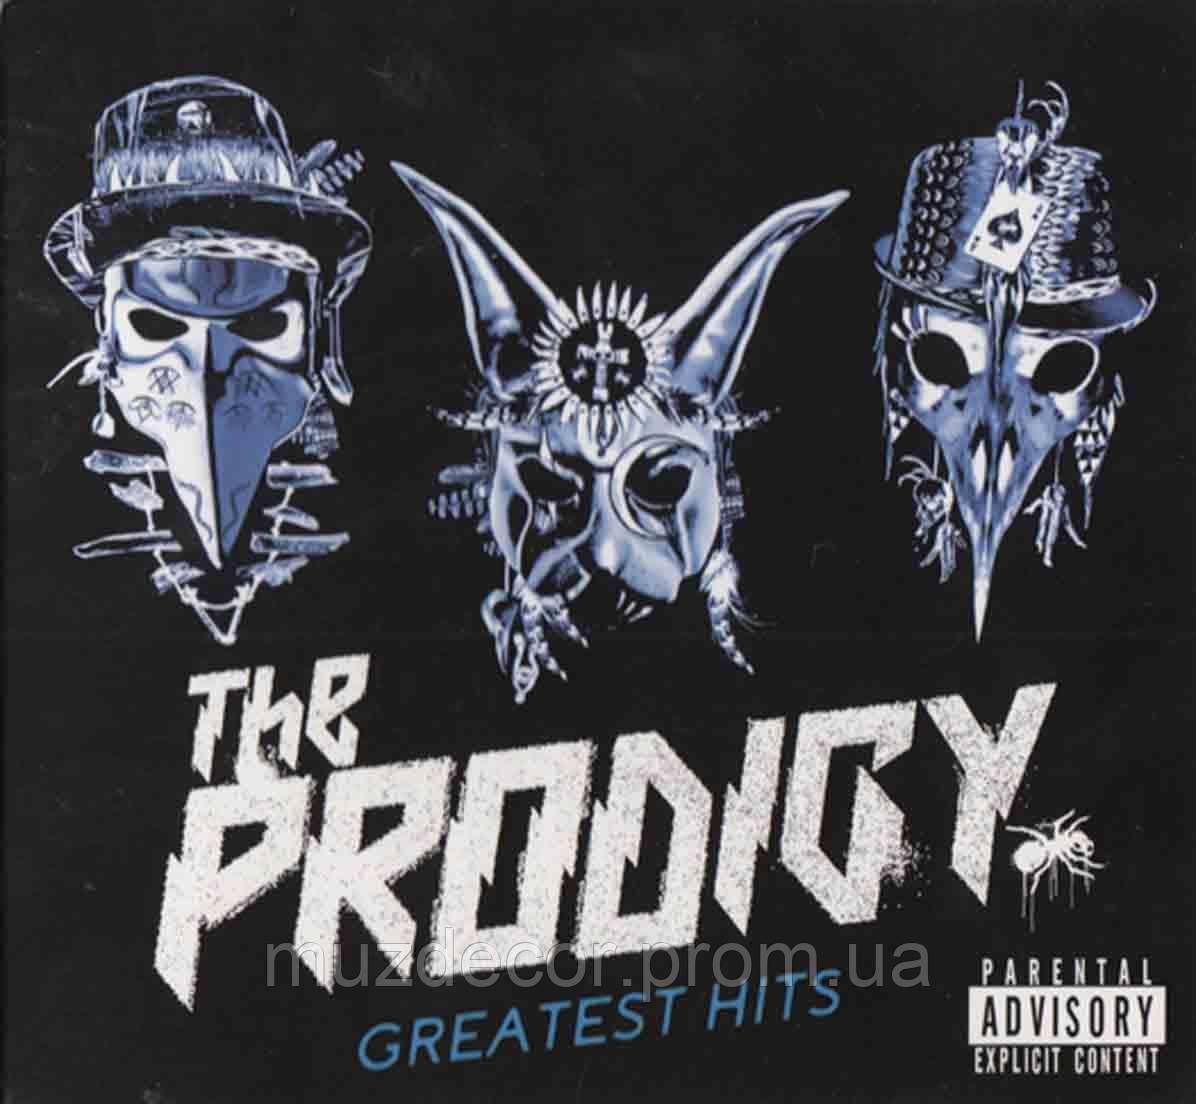 The Prodigy – Greatest Hits, Audio CD, (2cd, digipak)